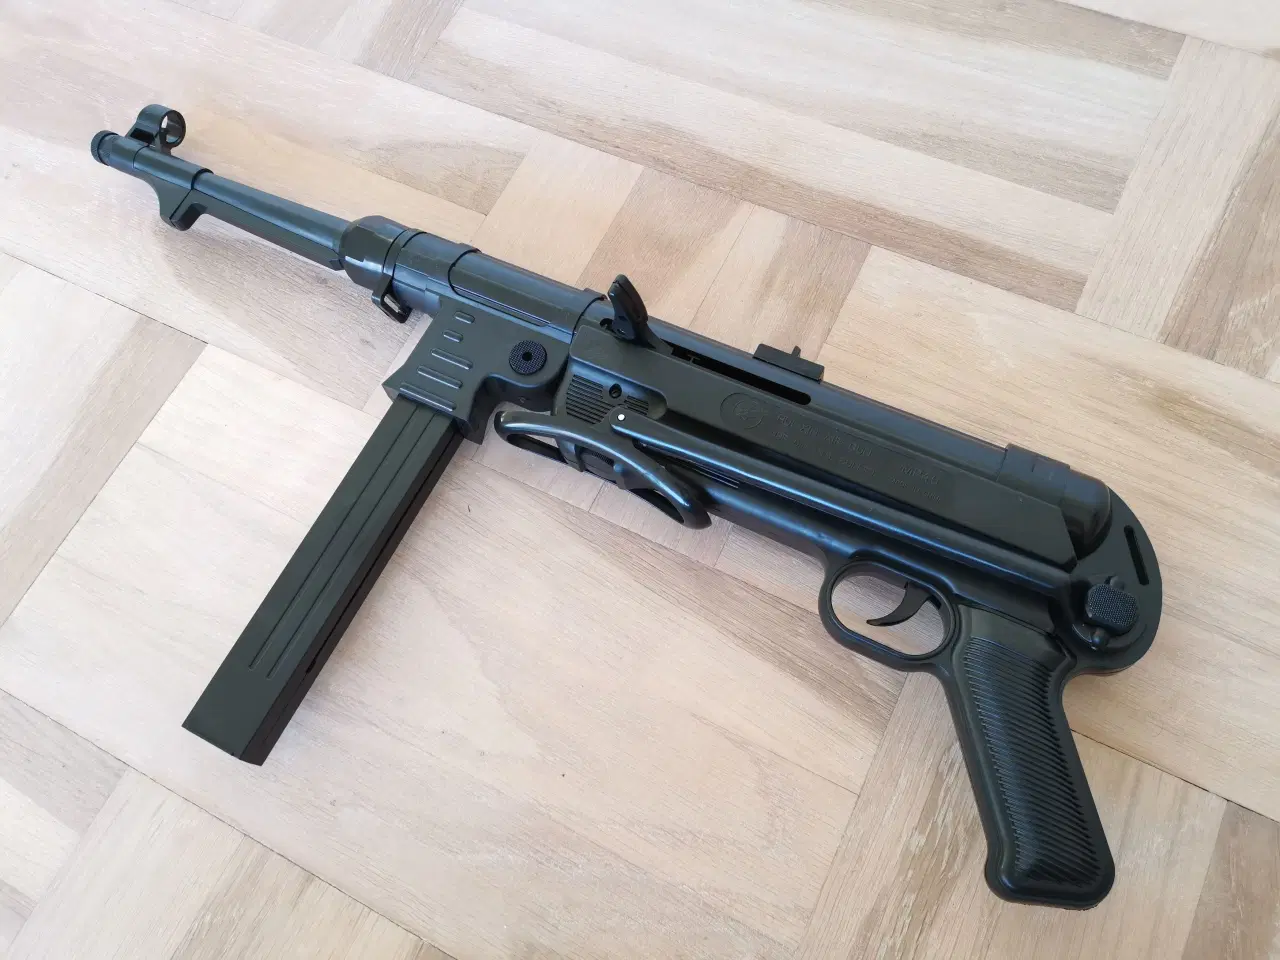 Billede 2 - Tysk MP40 Softgun